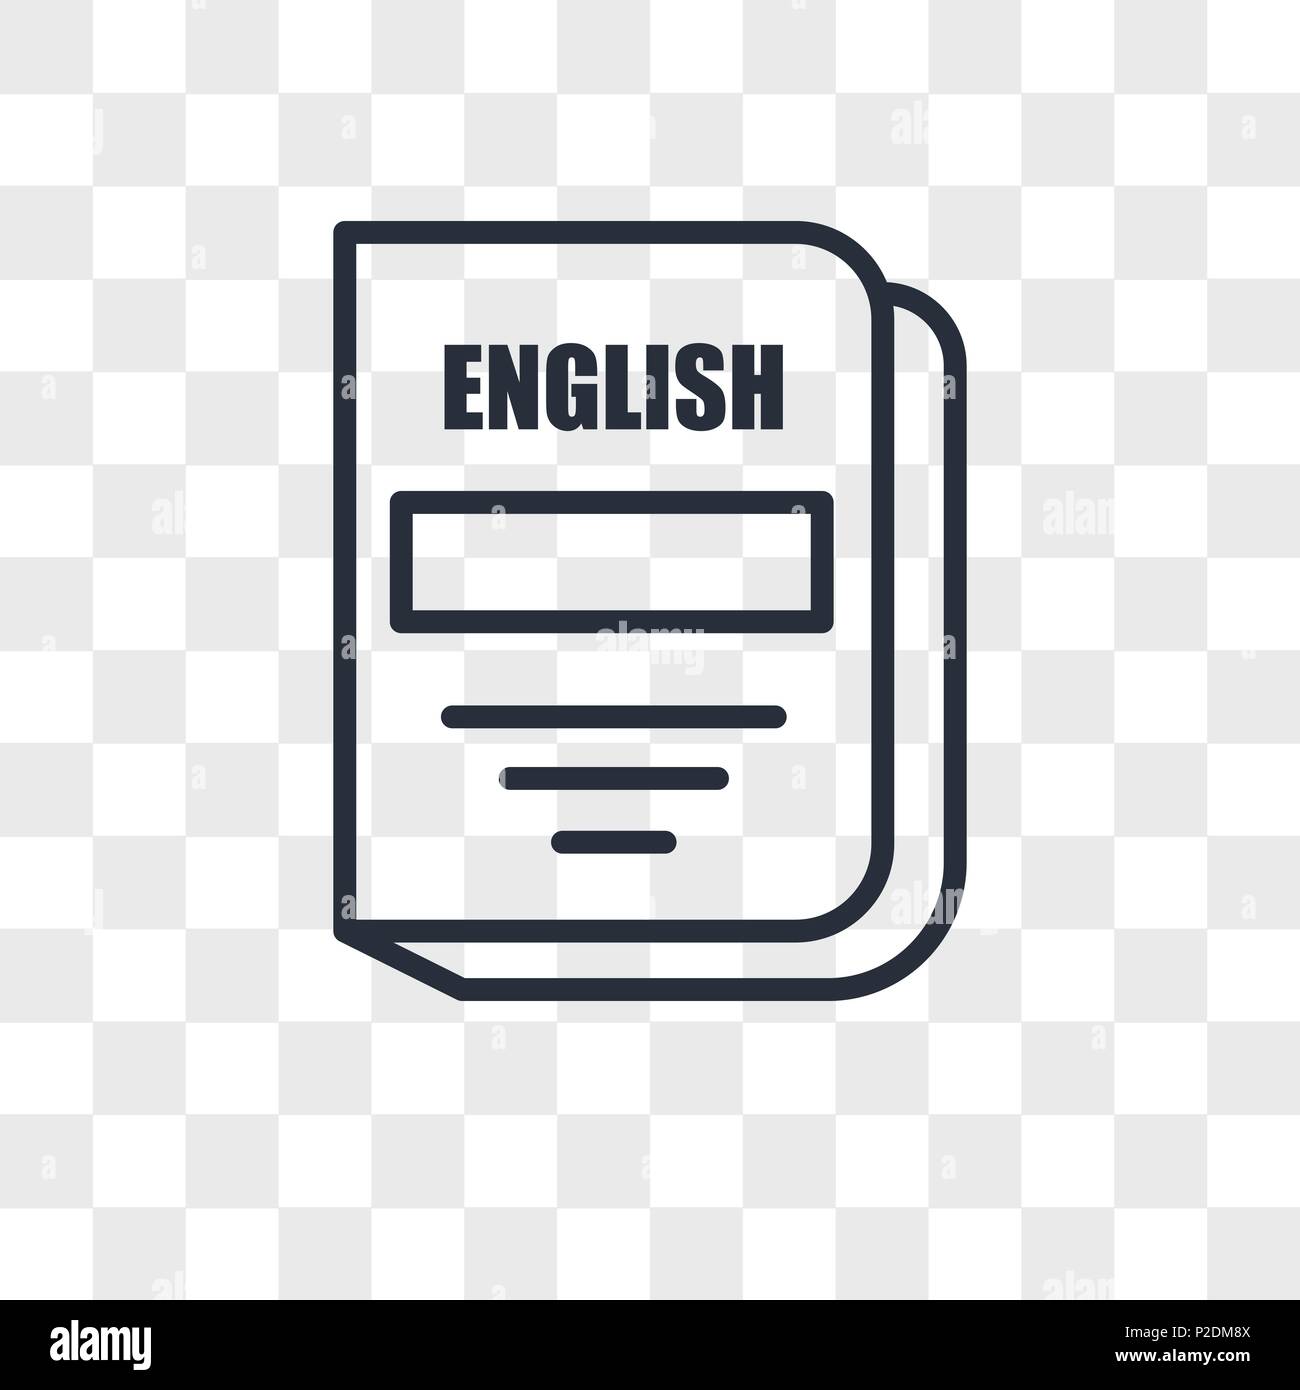 English Subject Vector Icon Isolated On Transparent Background English